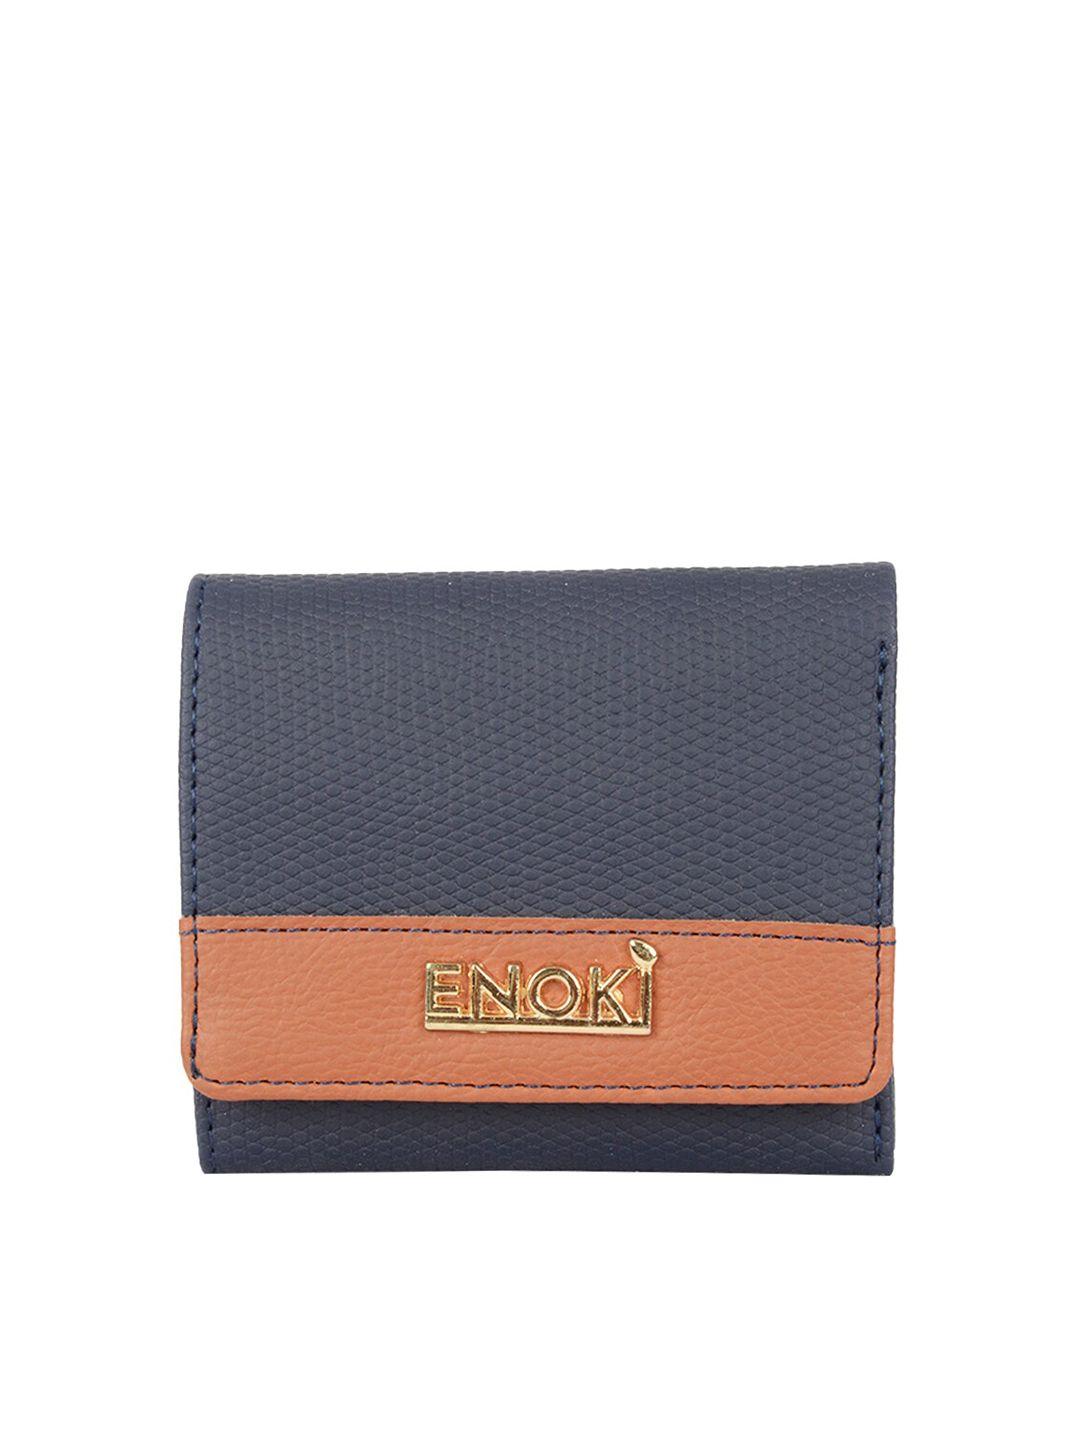 enoki women three fold wallet